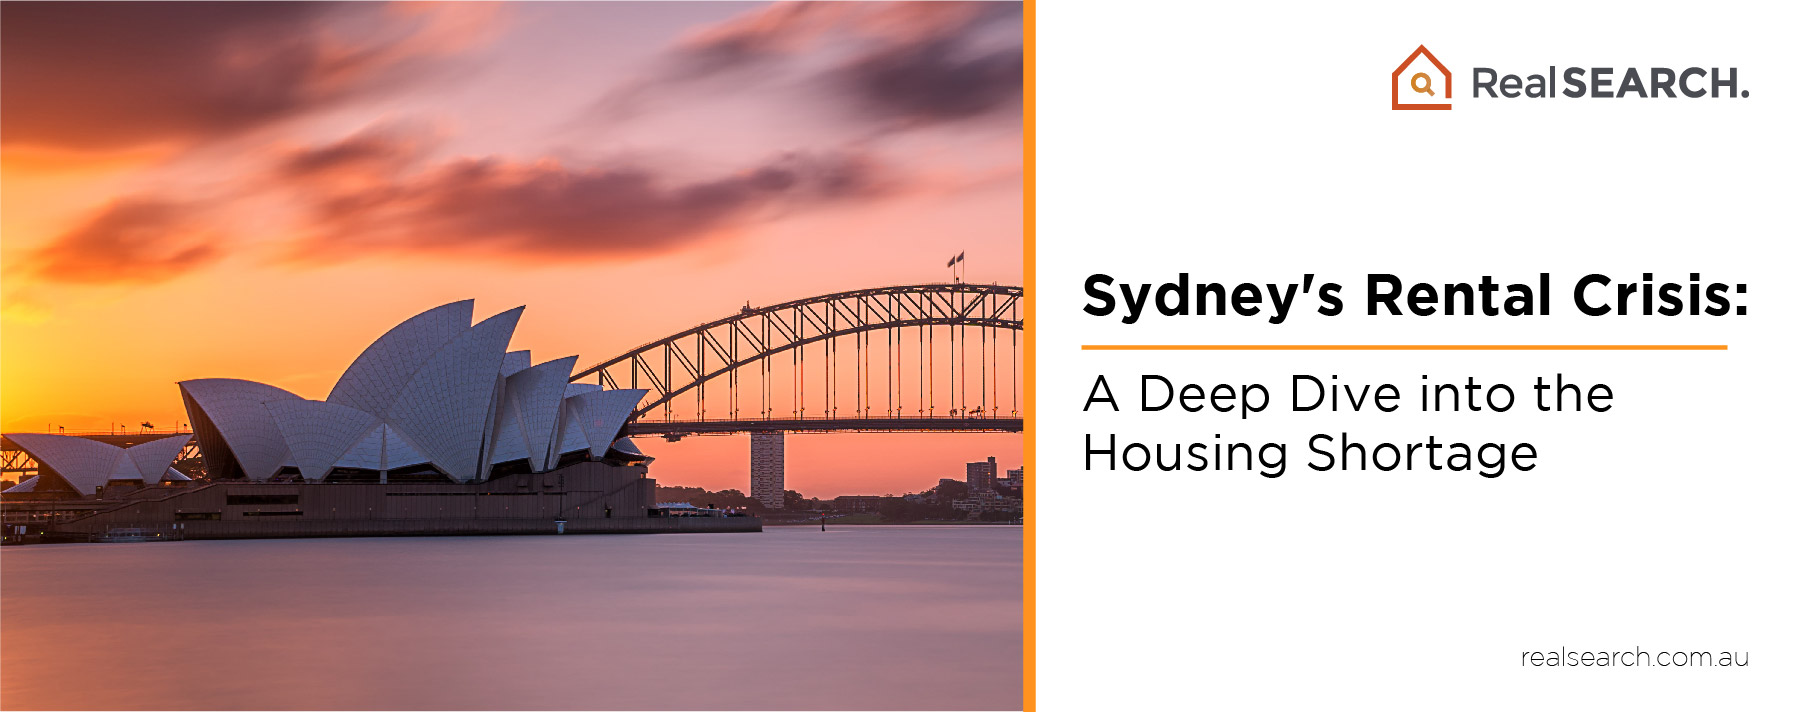 Sydney's Rental Crisis: A Deep Dive into the Housing Shortage